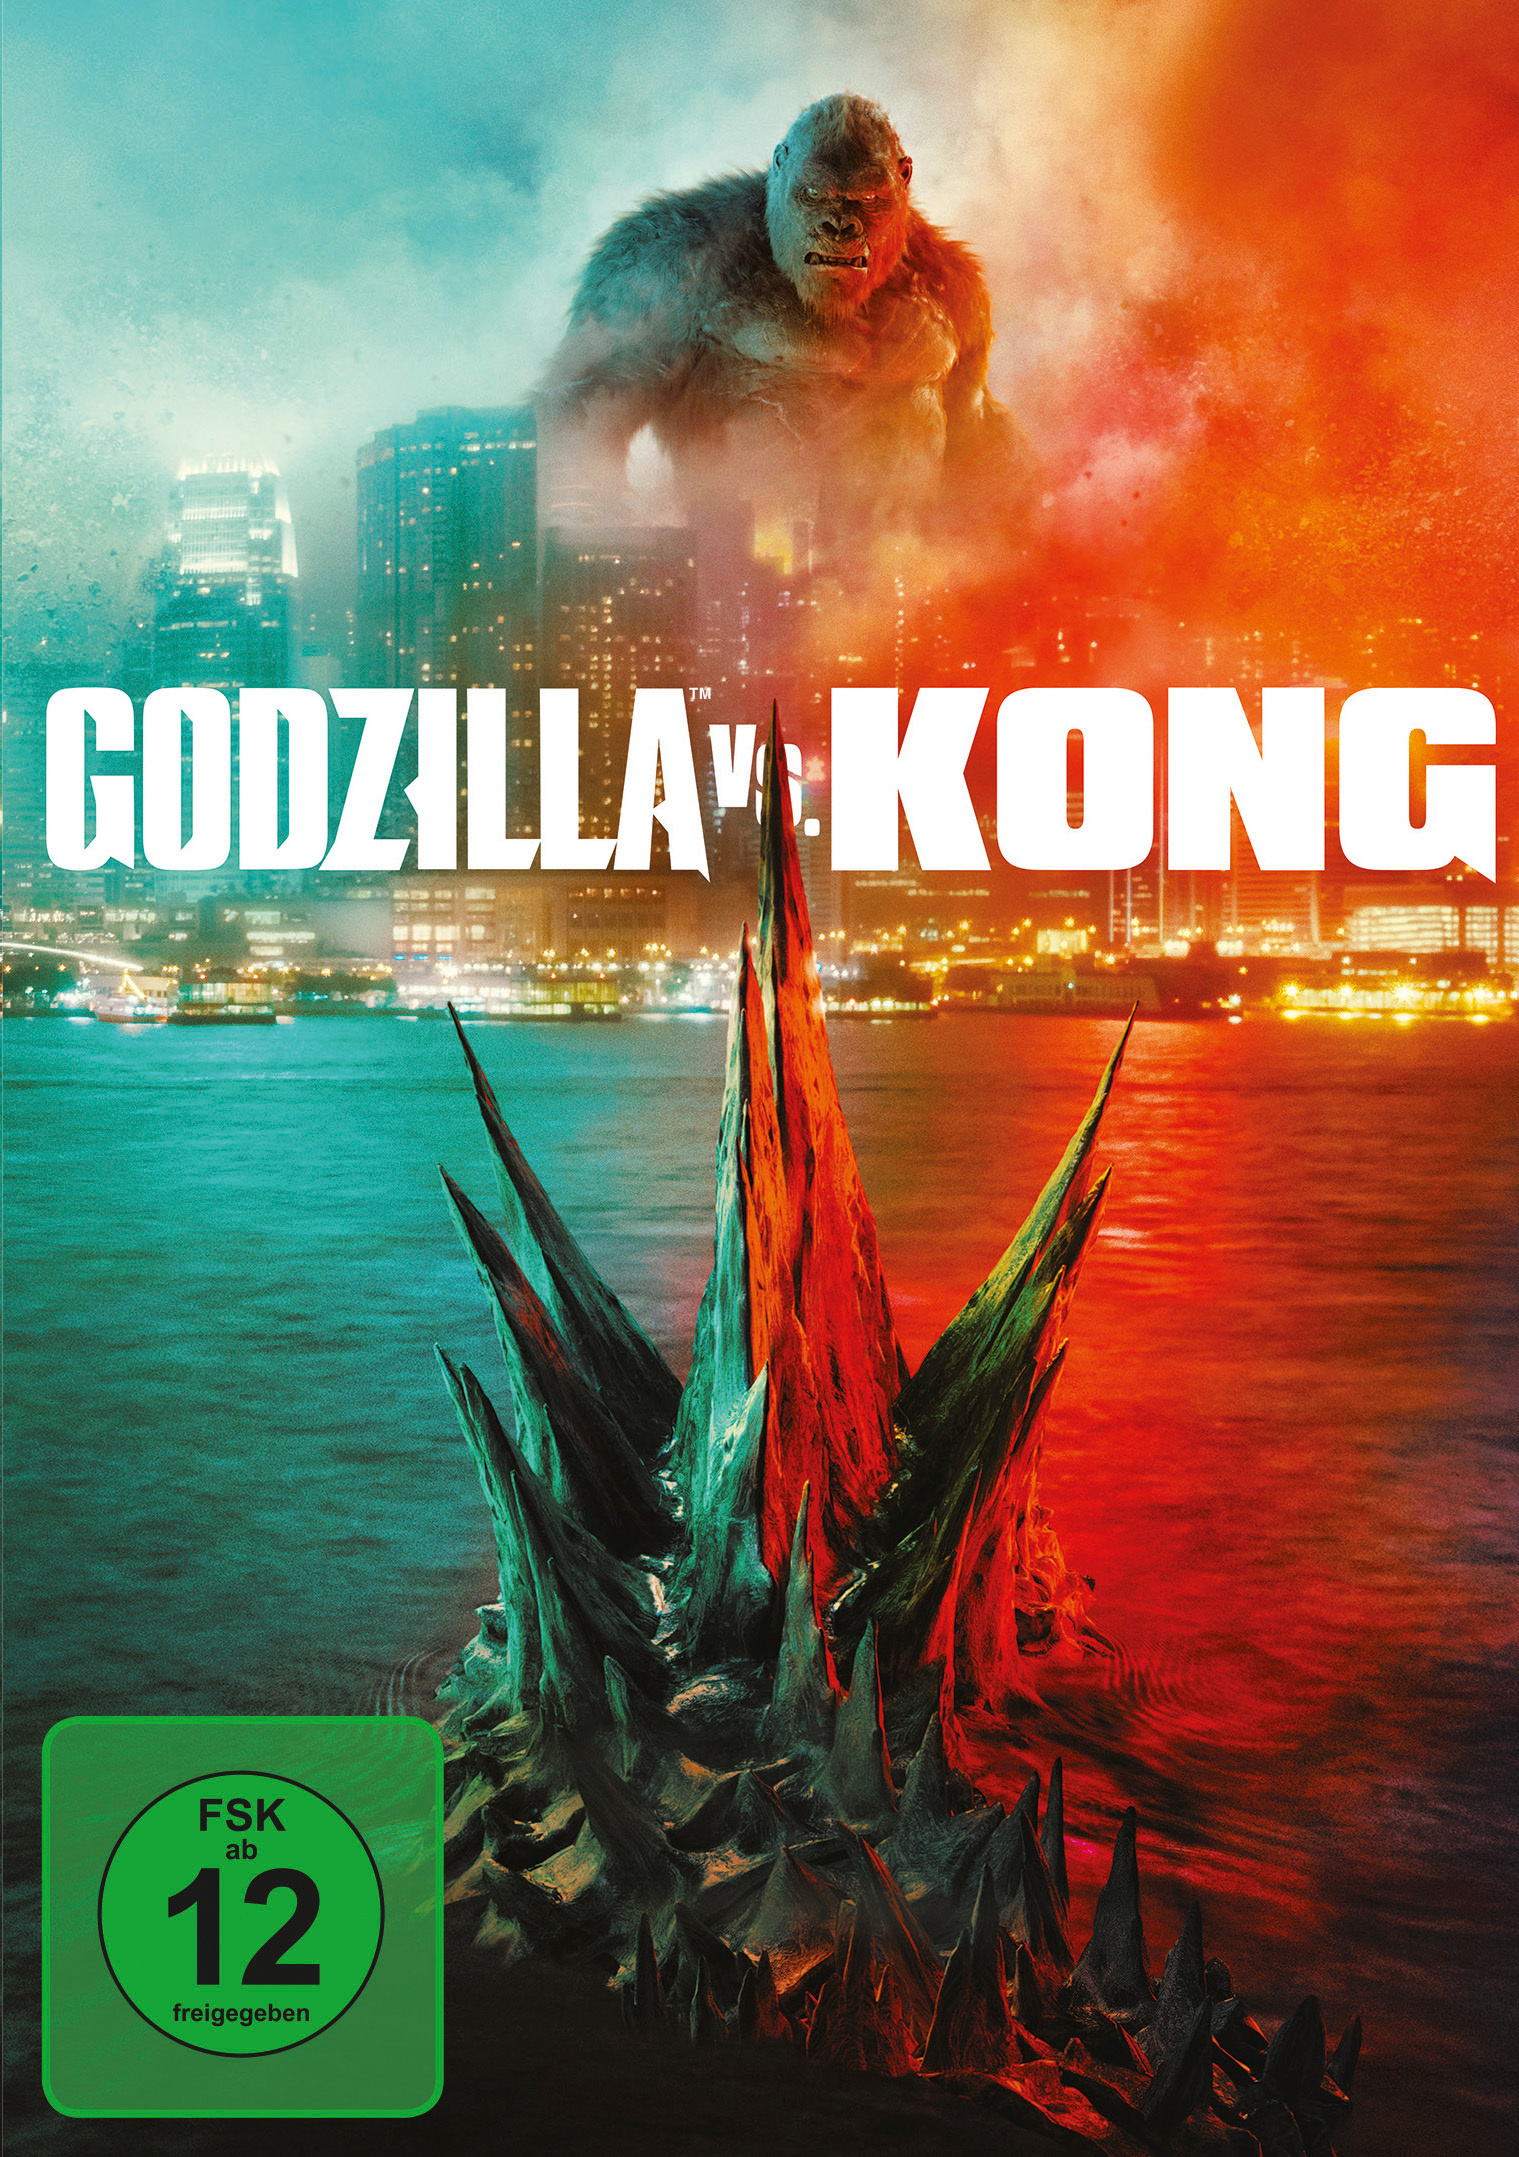 Godzilla vs Kong izle (2021)